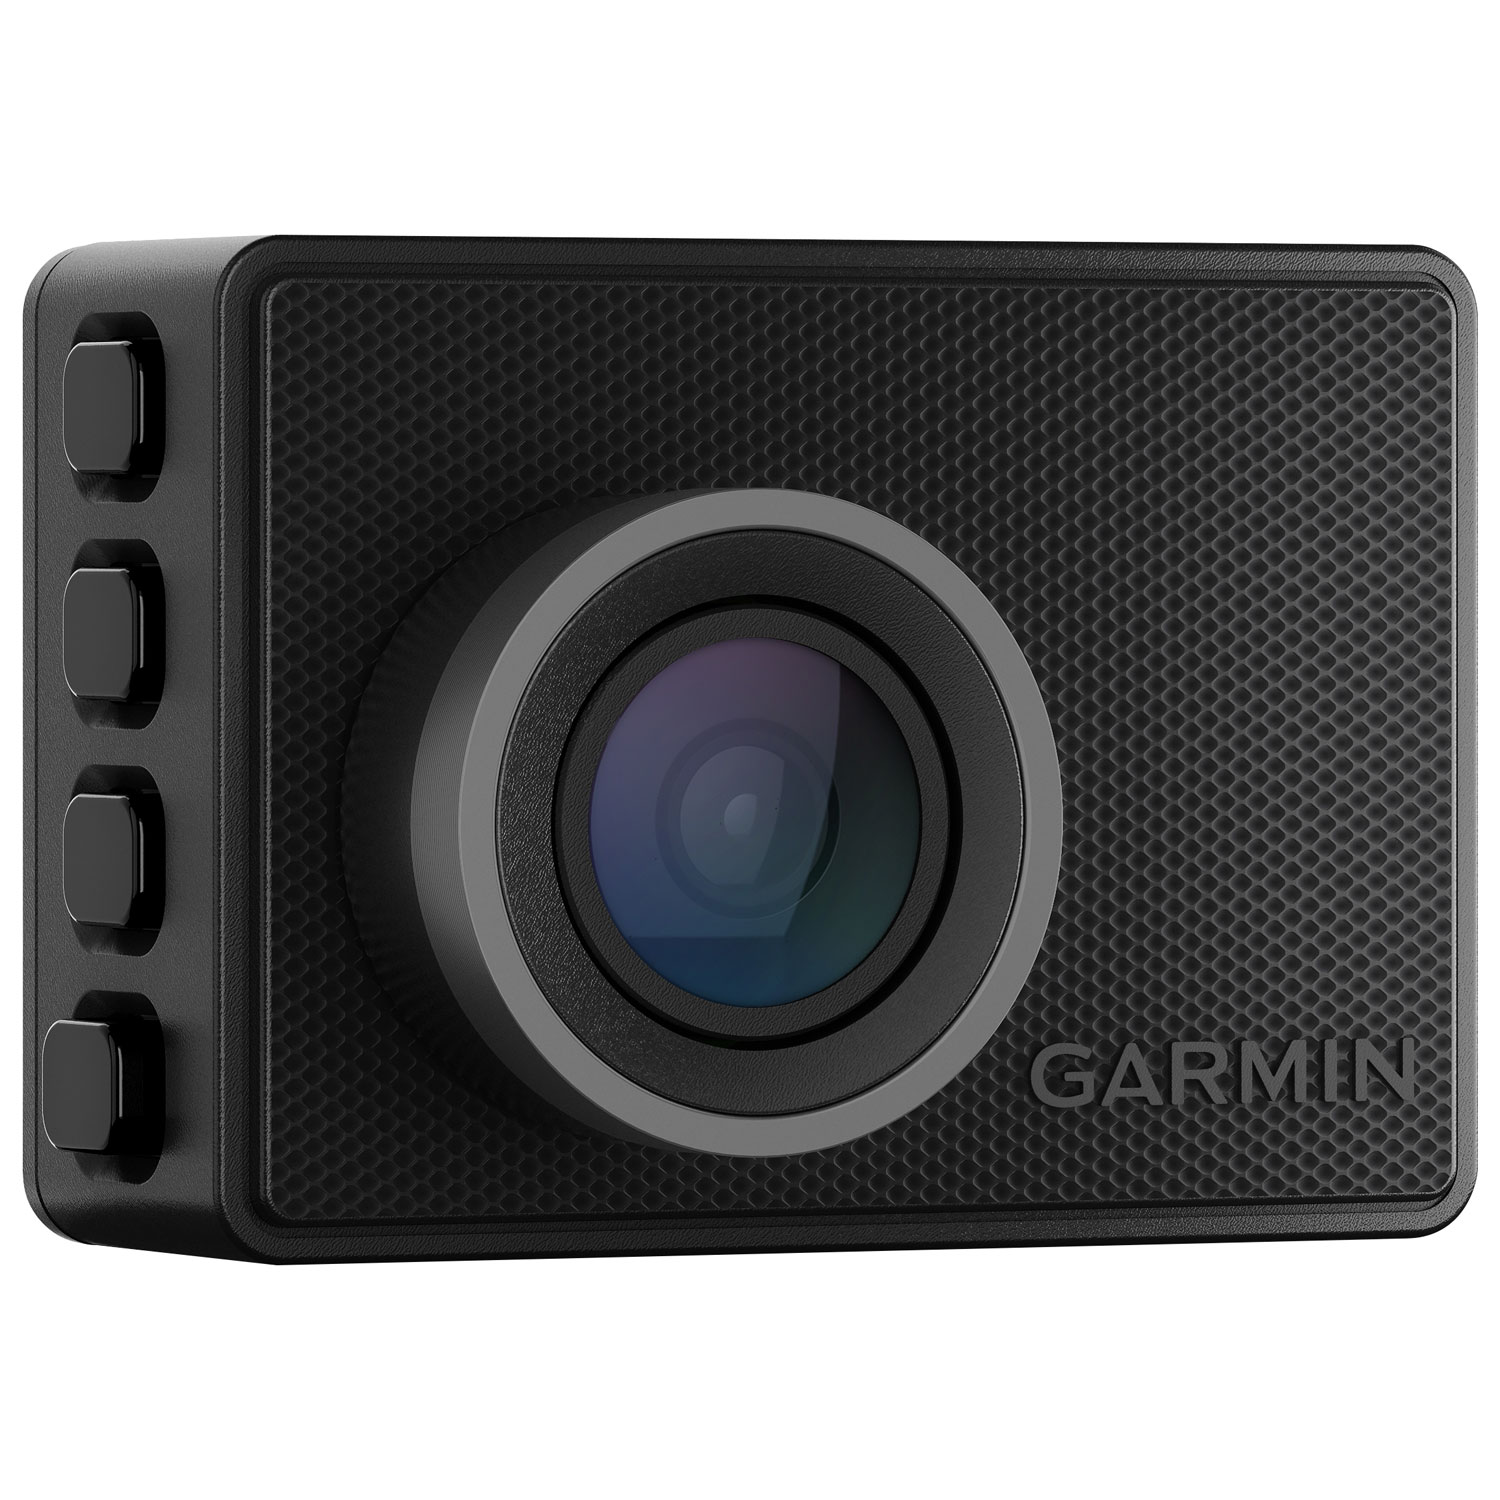 Garmin 47 1080p HD Dash Cam with LCD Screen & Wi-Fi